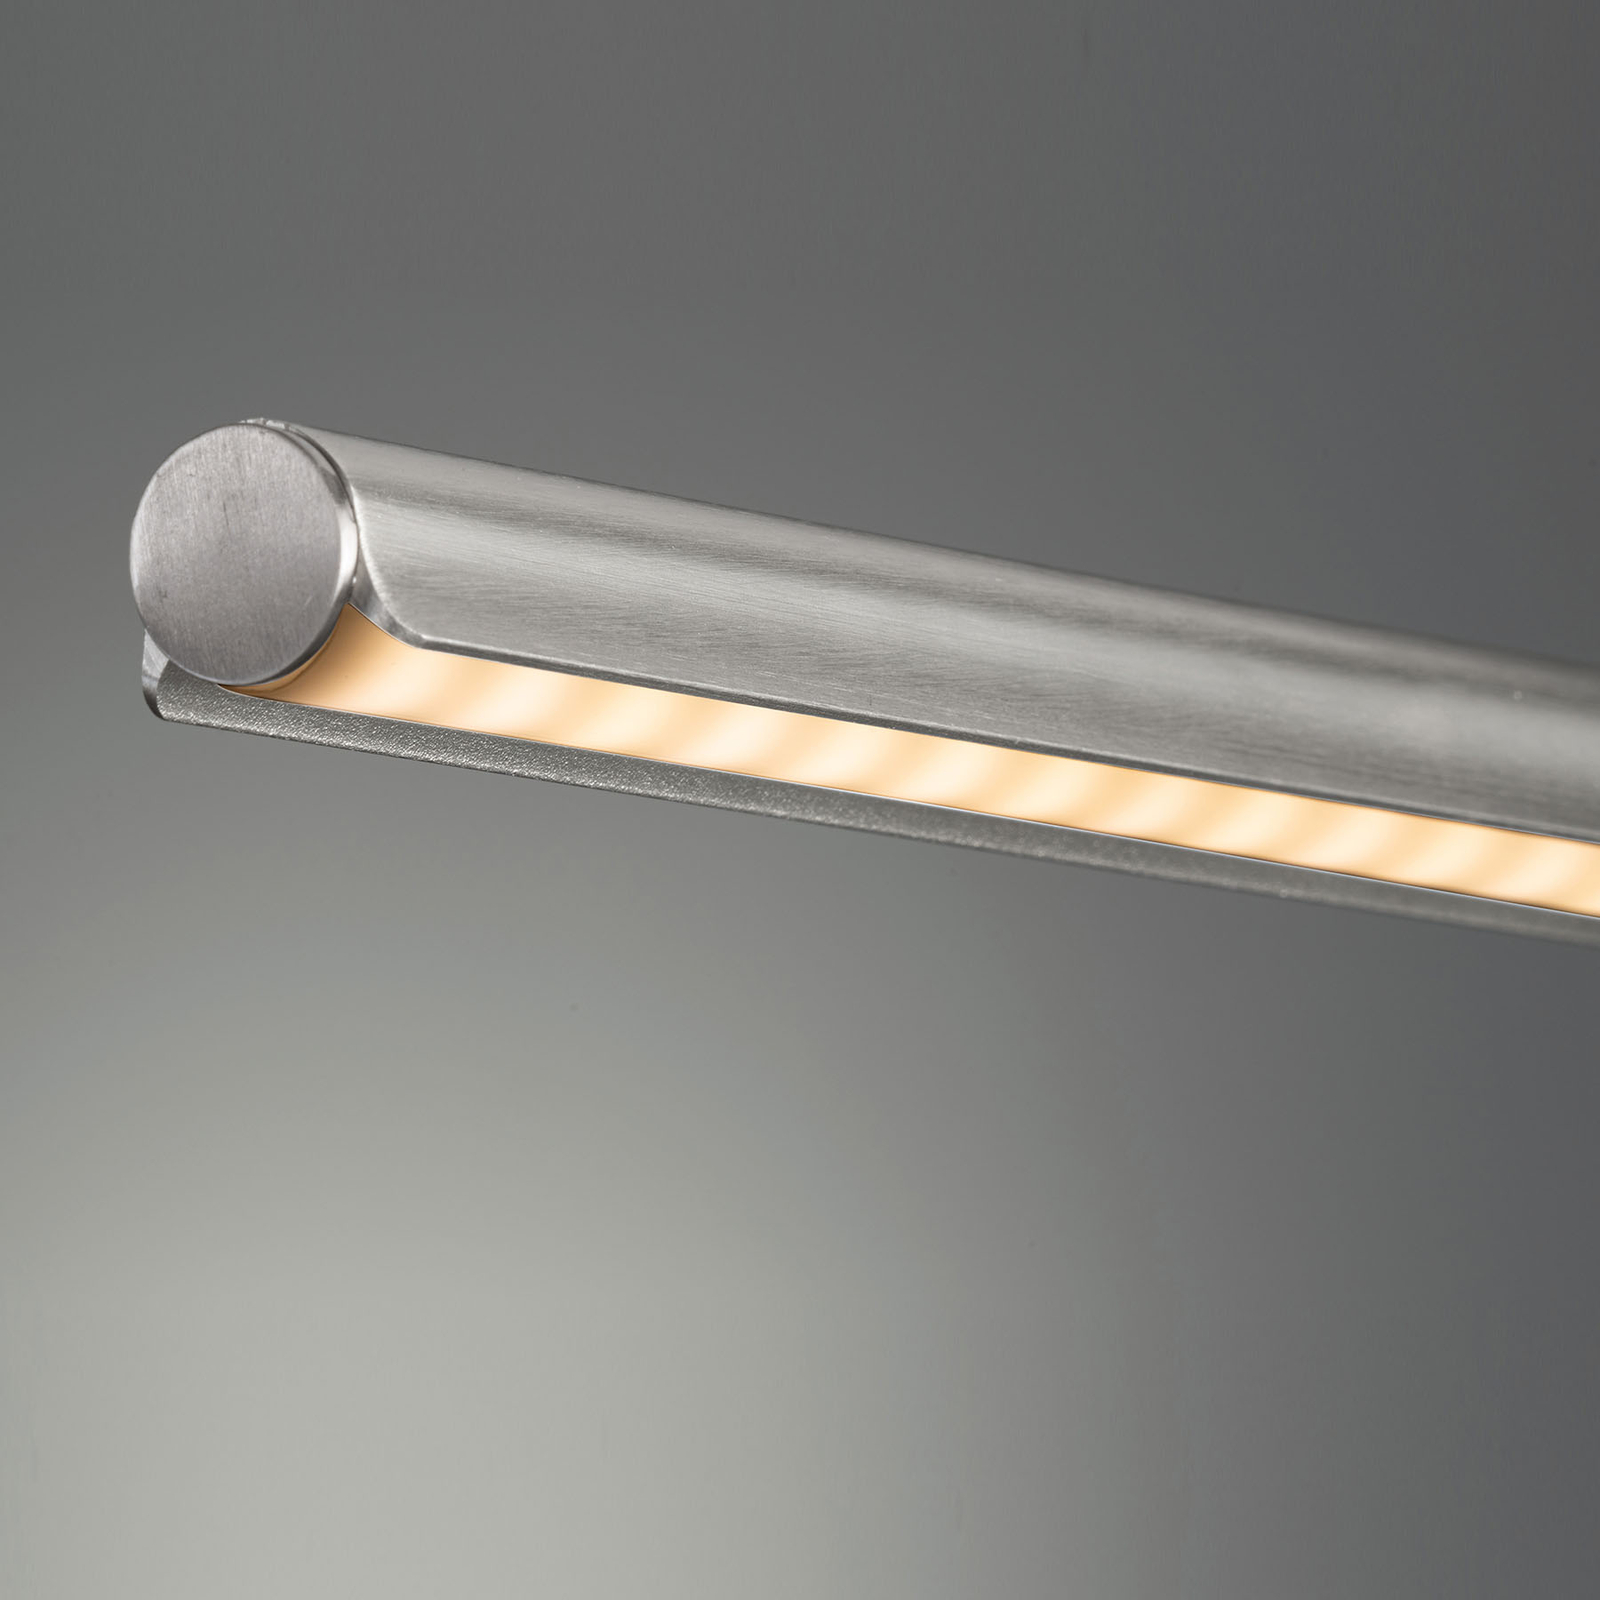 LED wandlamp Nami met schakelaar, nikkelkleurig